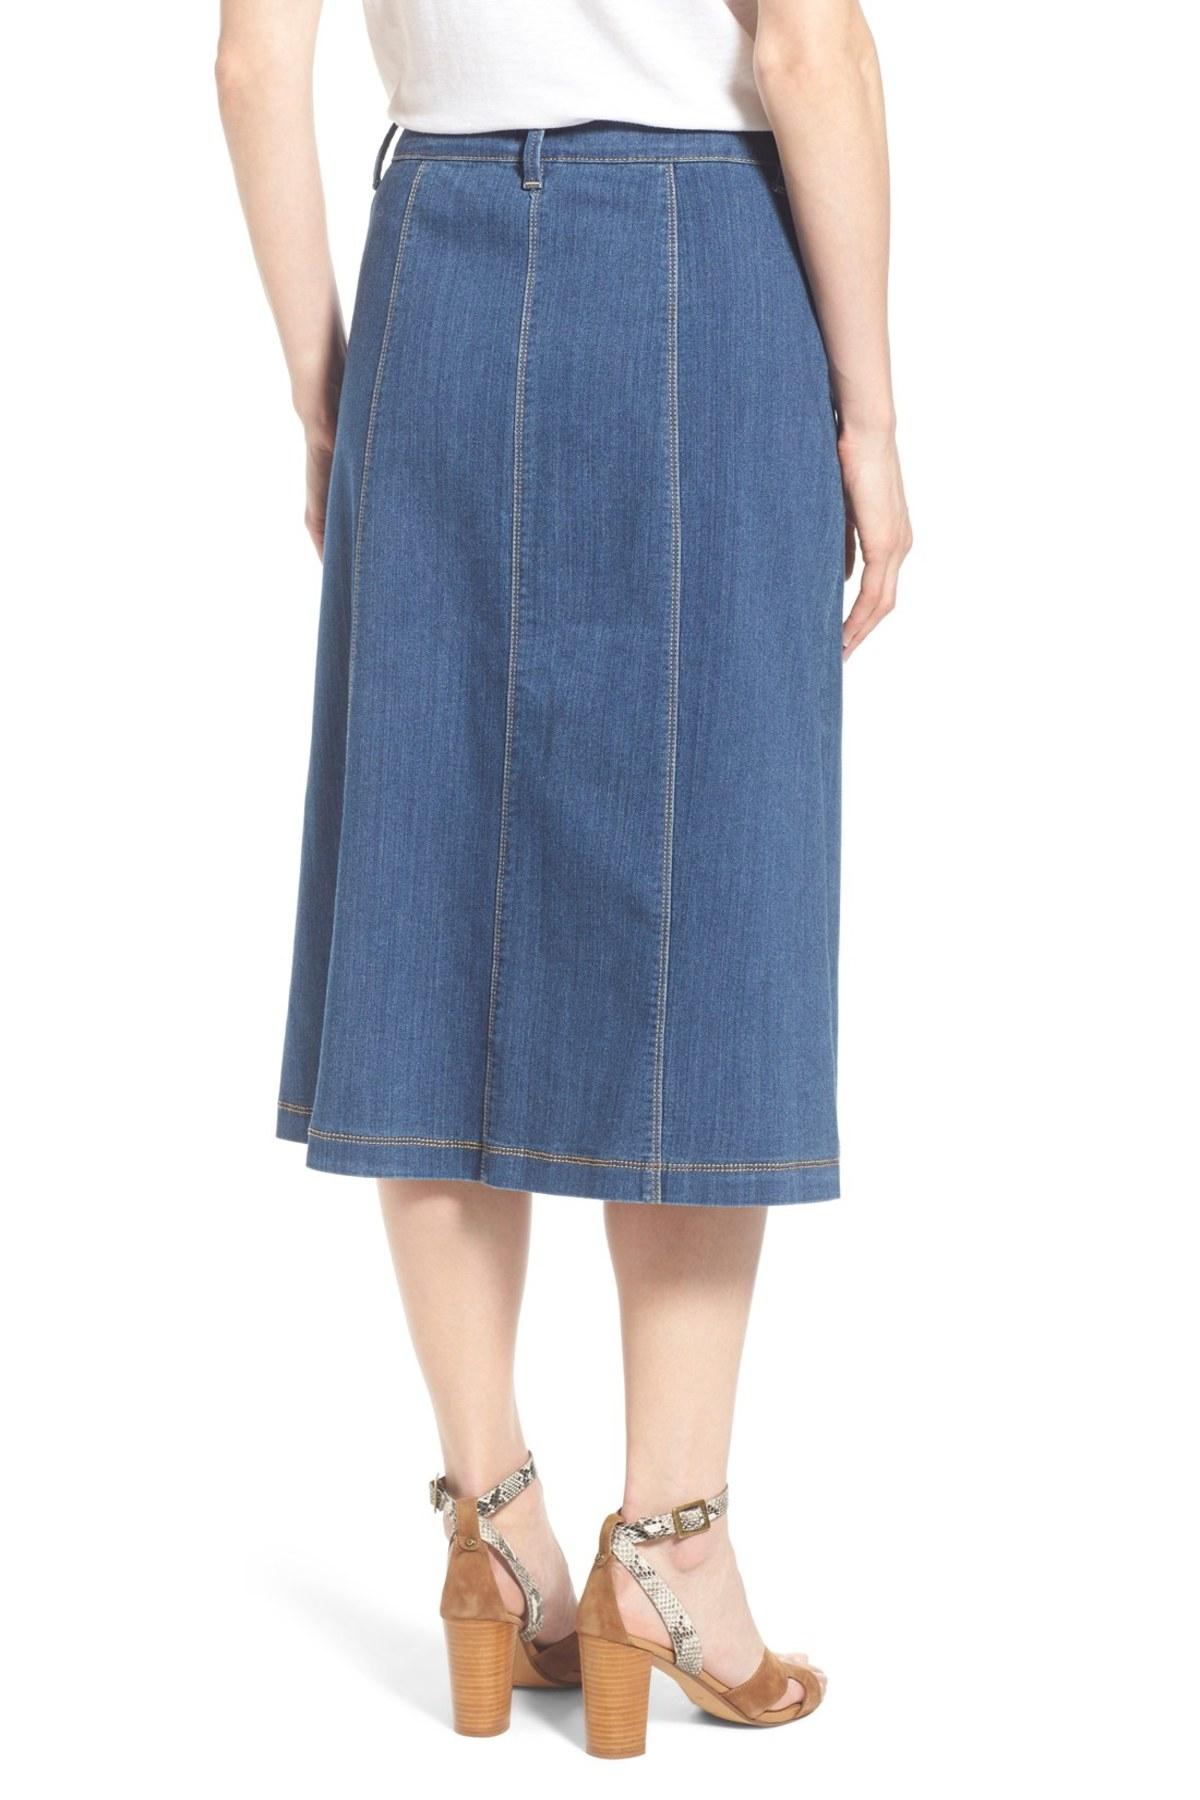 Lyst - NYDJ Carly Button Front Denim Midi Skirt in Blue